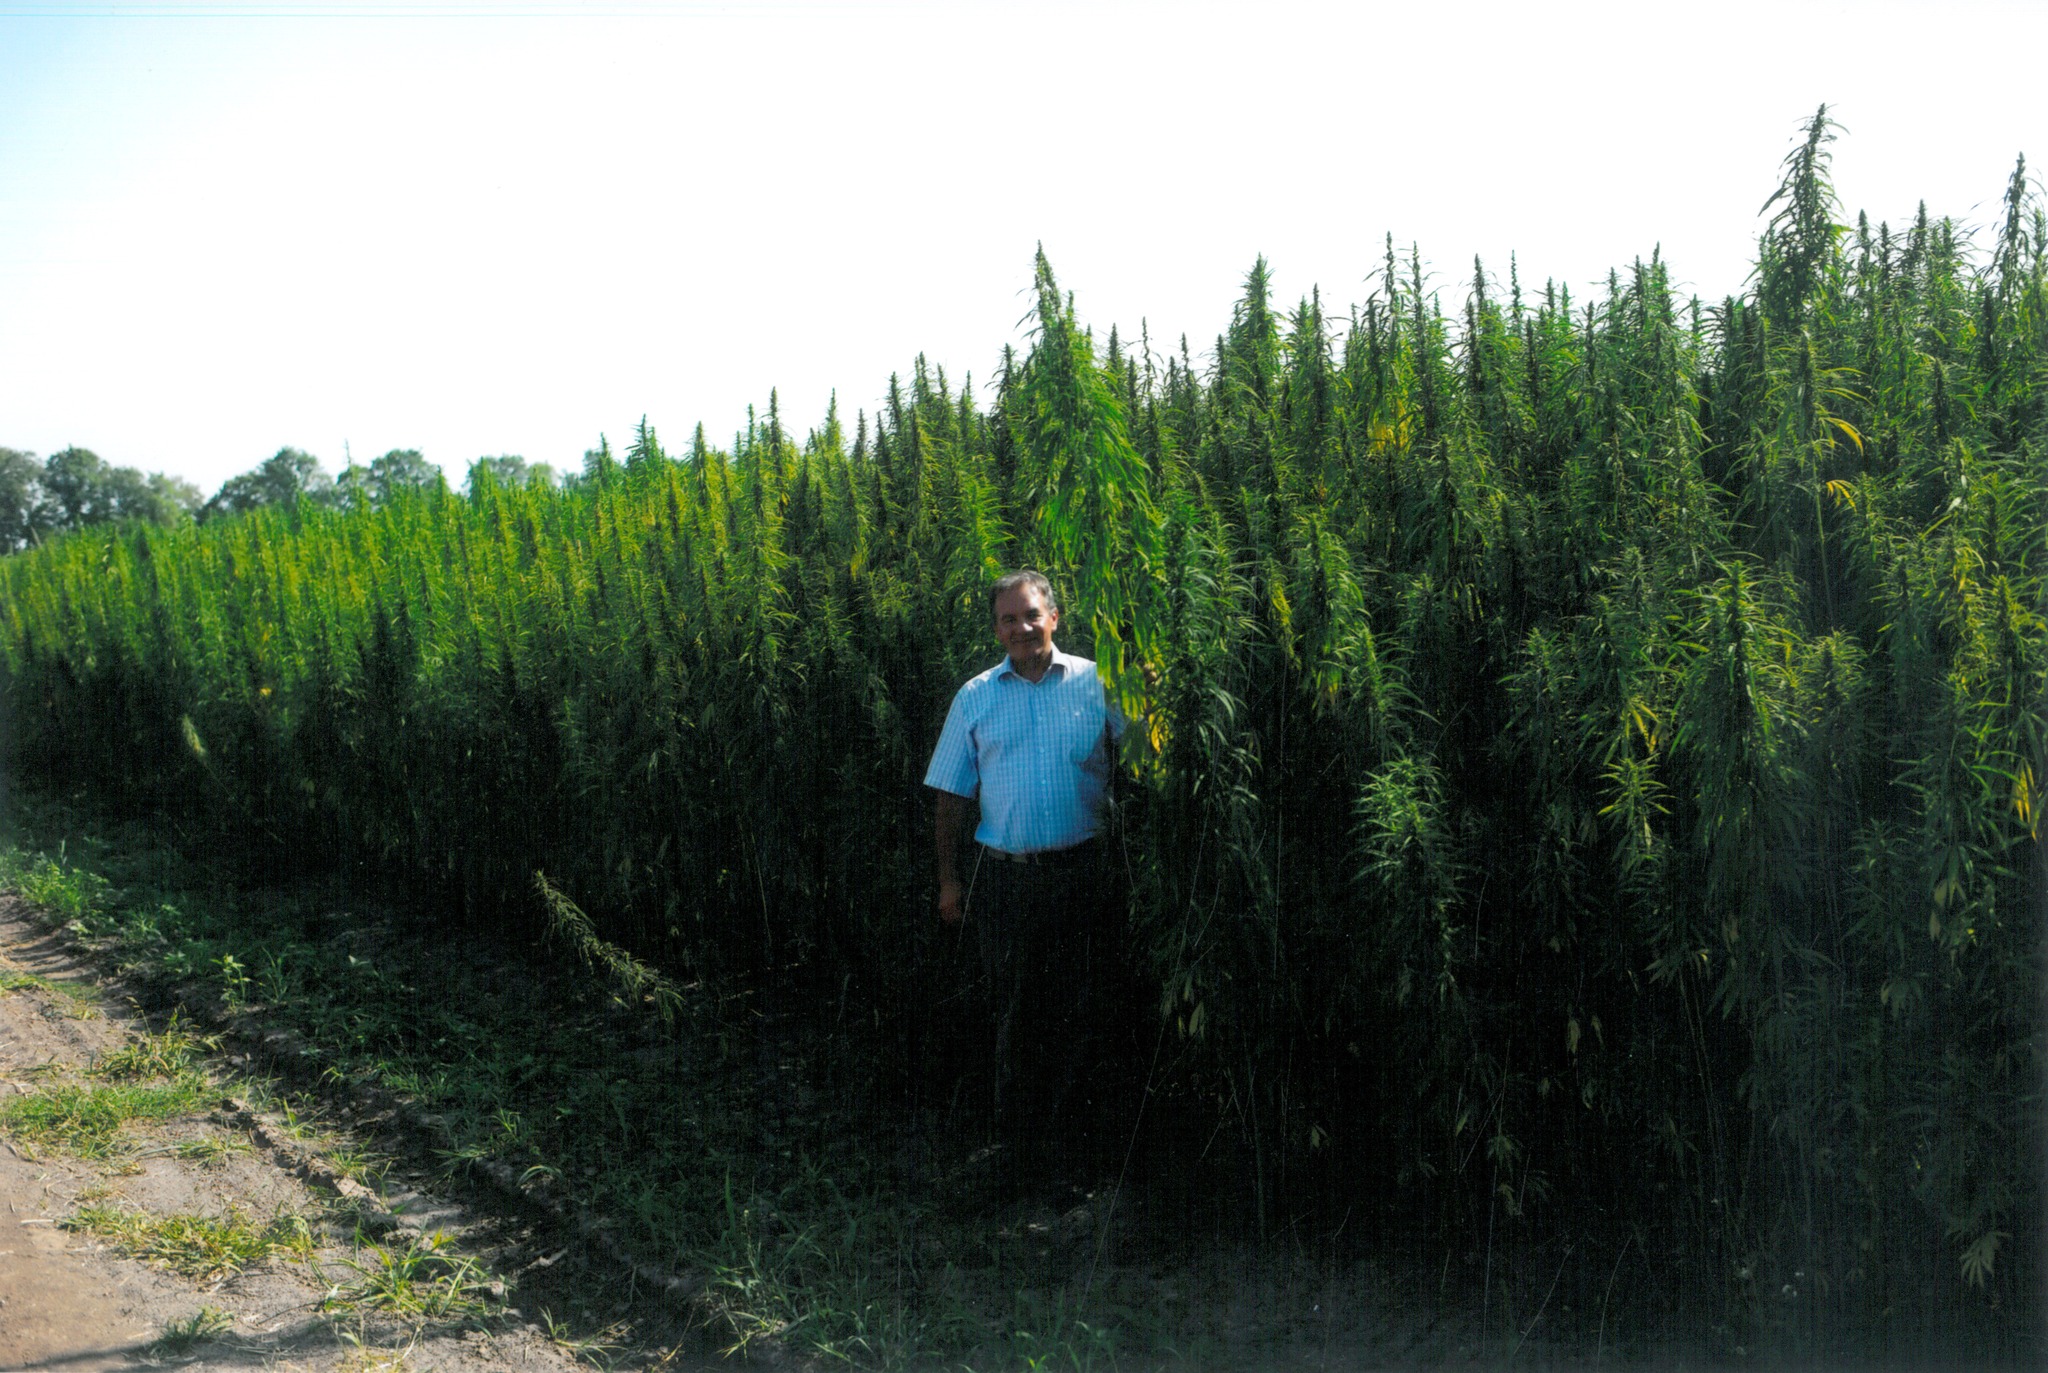 Industrial hemp cultivation park established in Ukraine